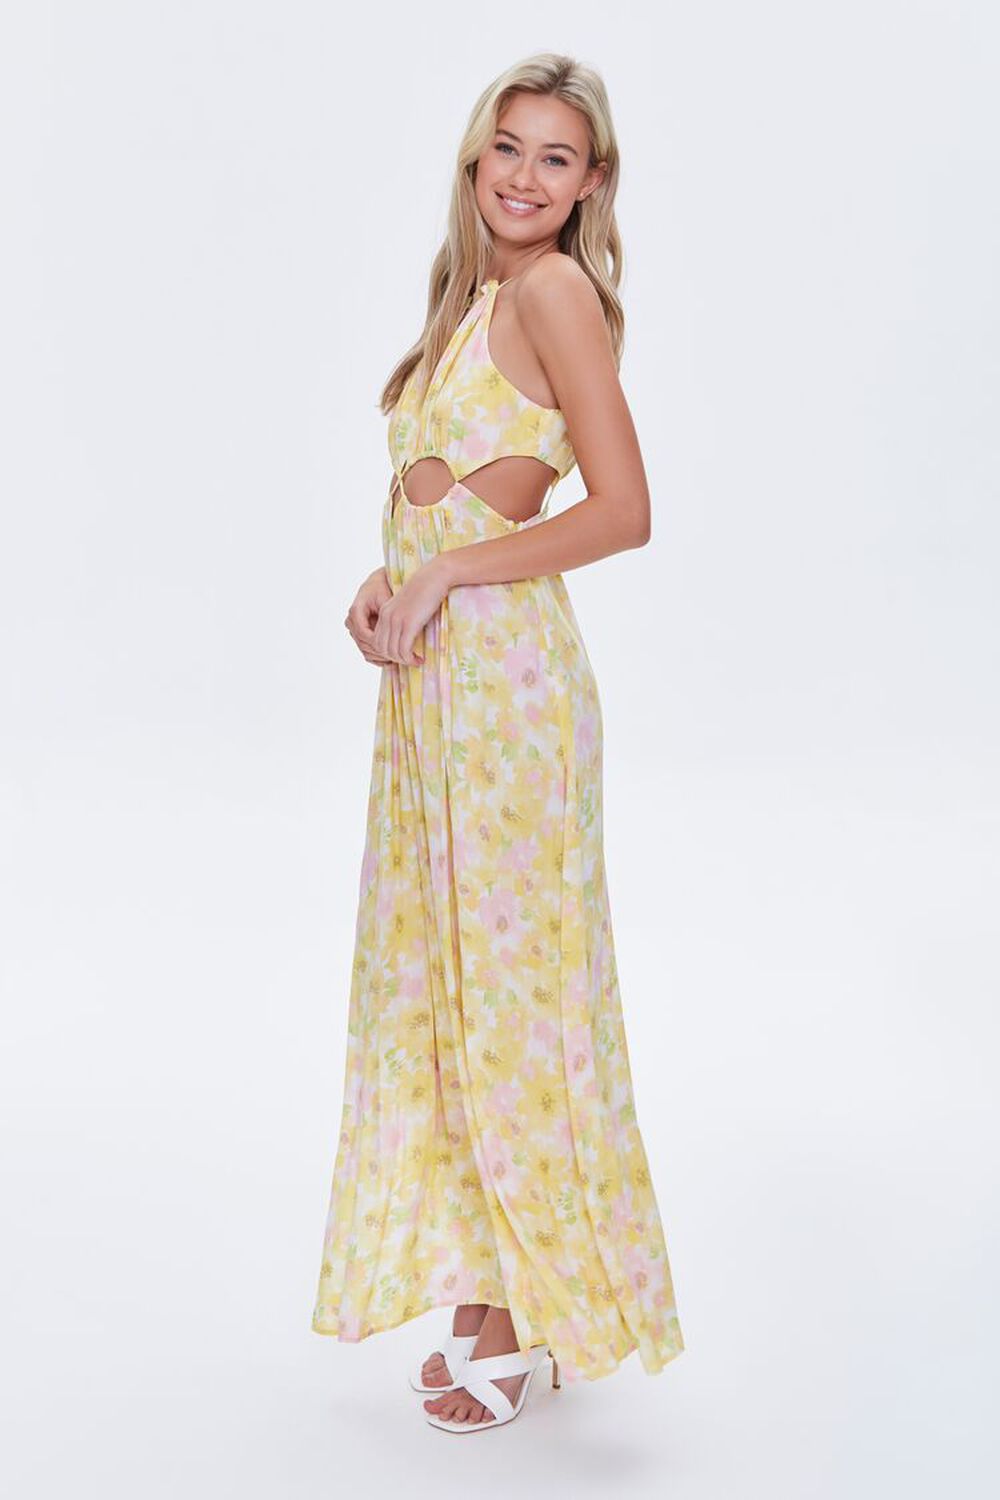 YELLOW/MULTI Floral Print Maxi Dress, image 3